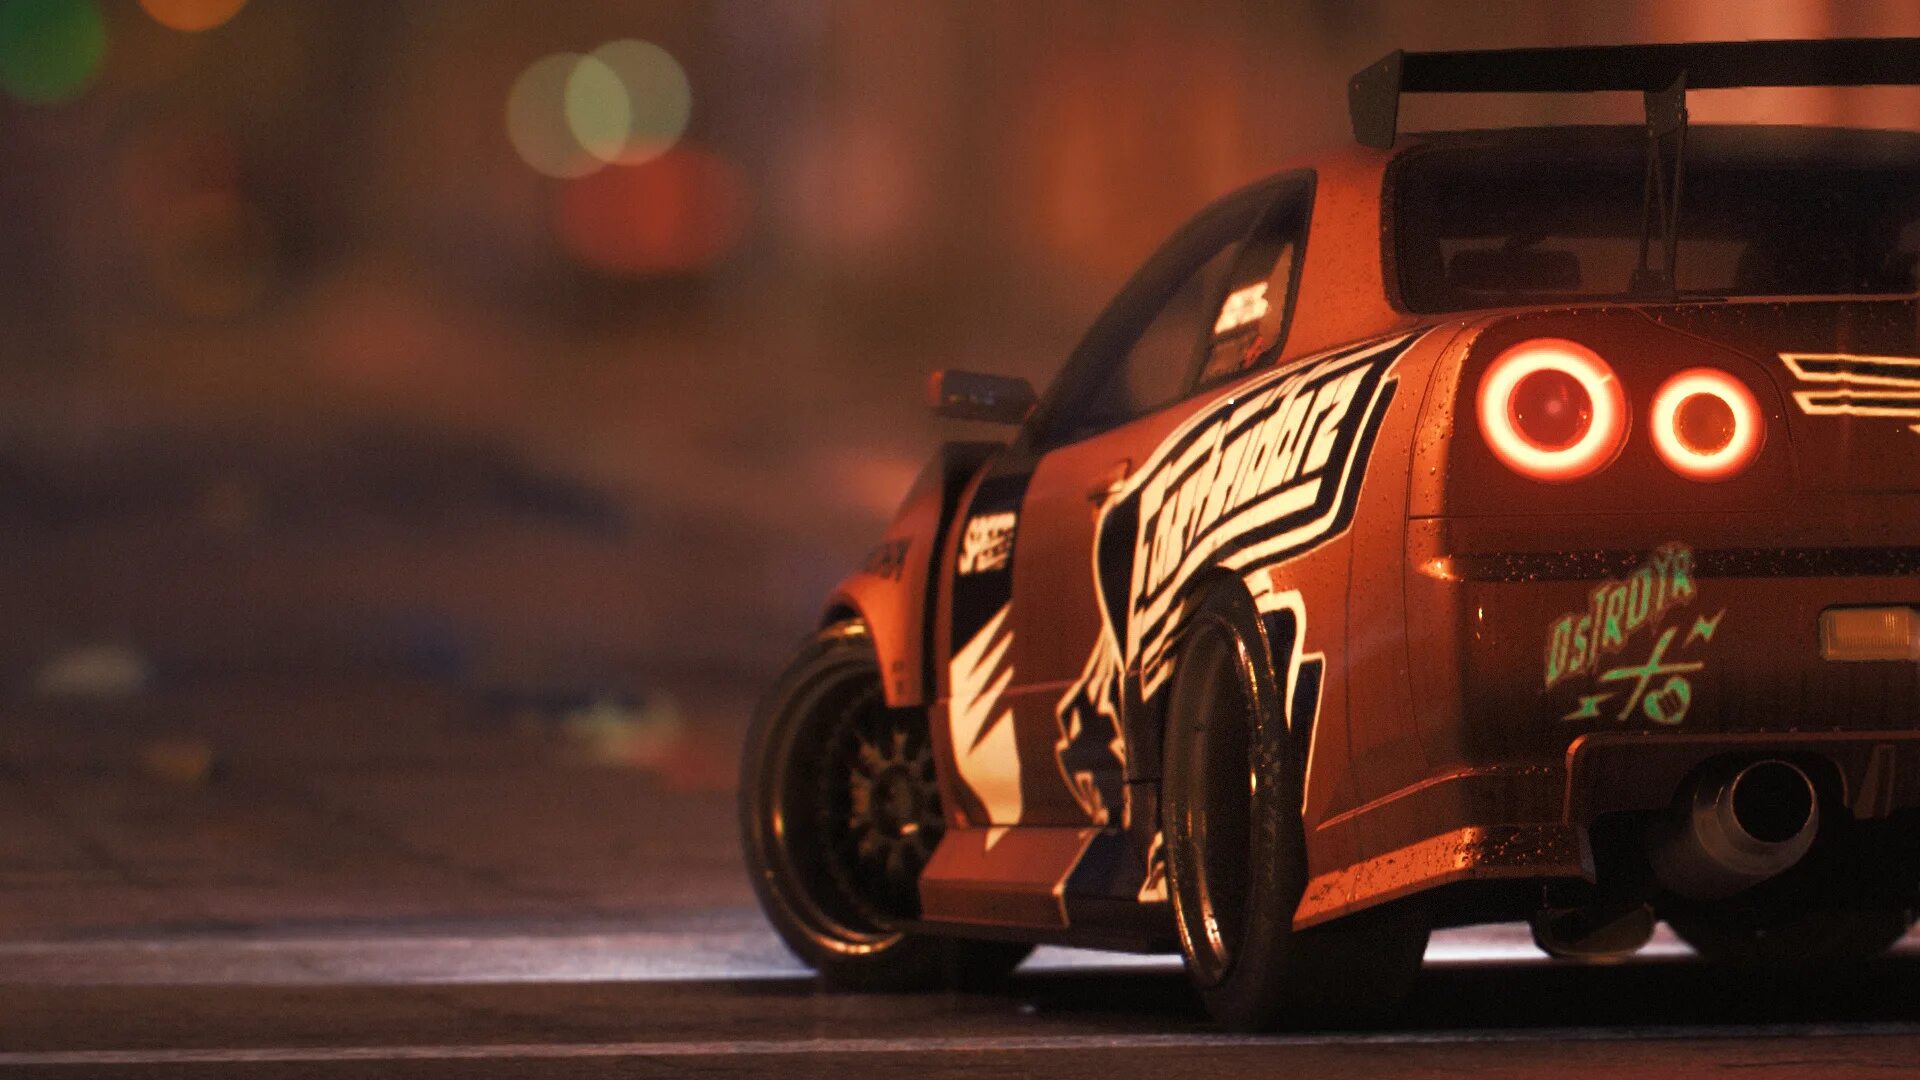 NFS 2015 Эдди ЧЕЛЛЕНДЖ. Нид фор СПИД 2015. Need for Speed Underground 2015. Need for Speed (игра, 2015).